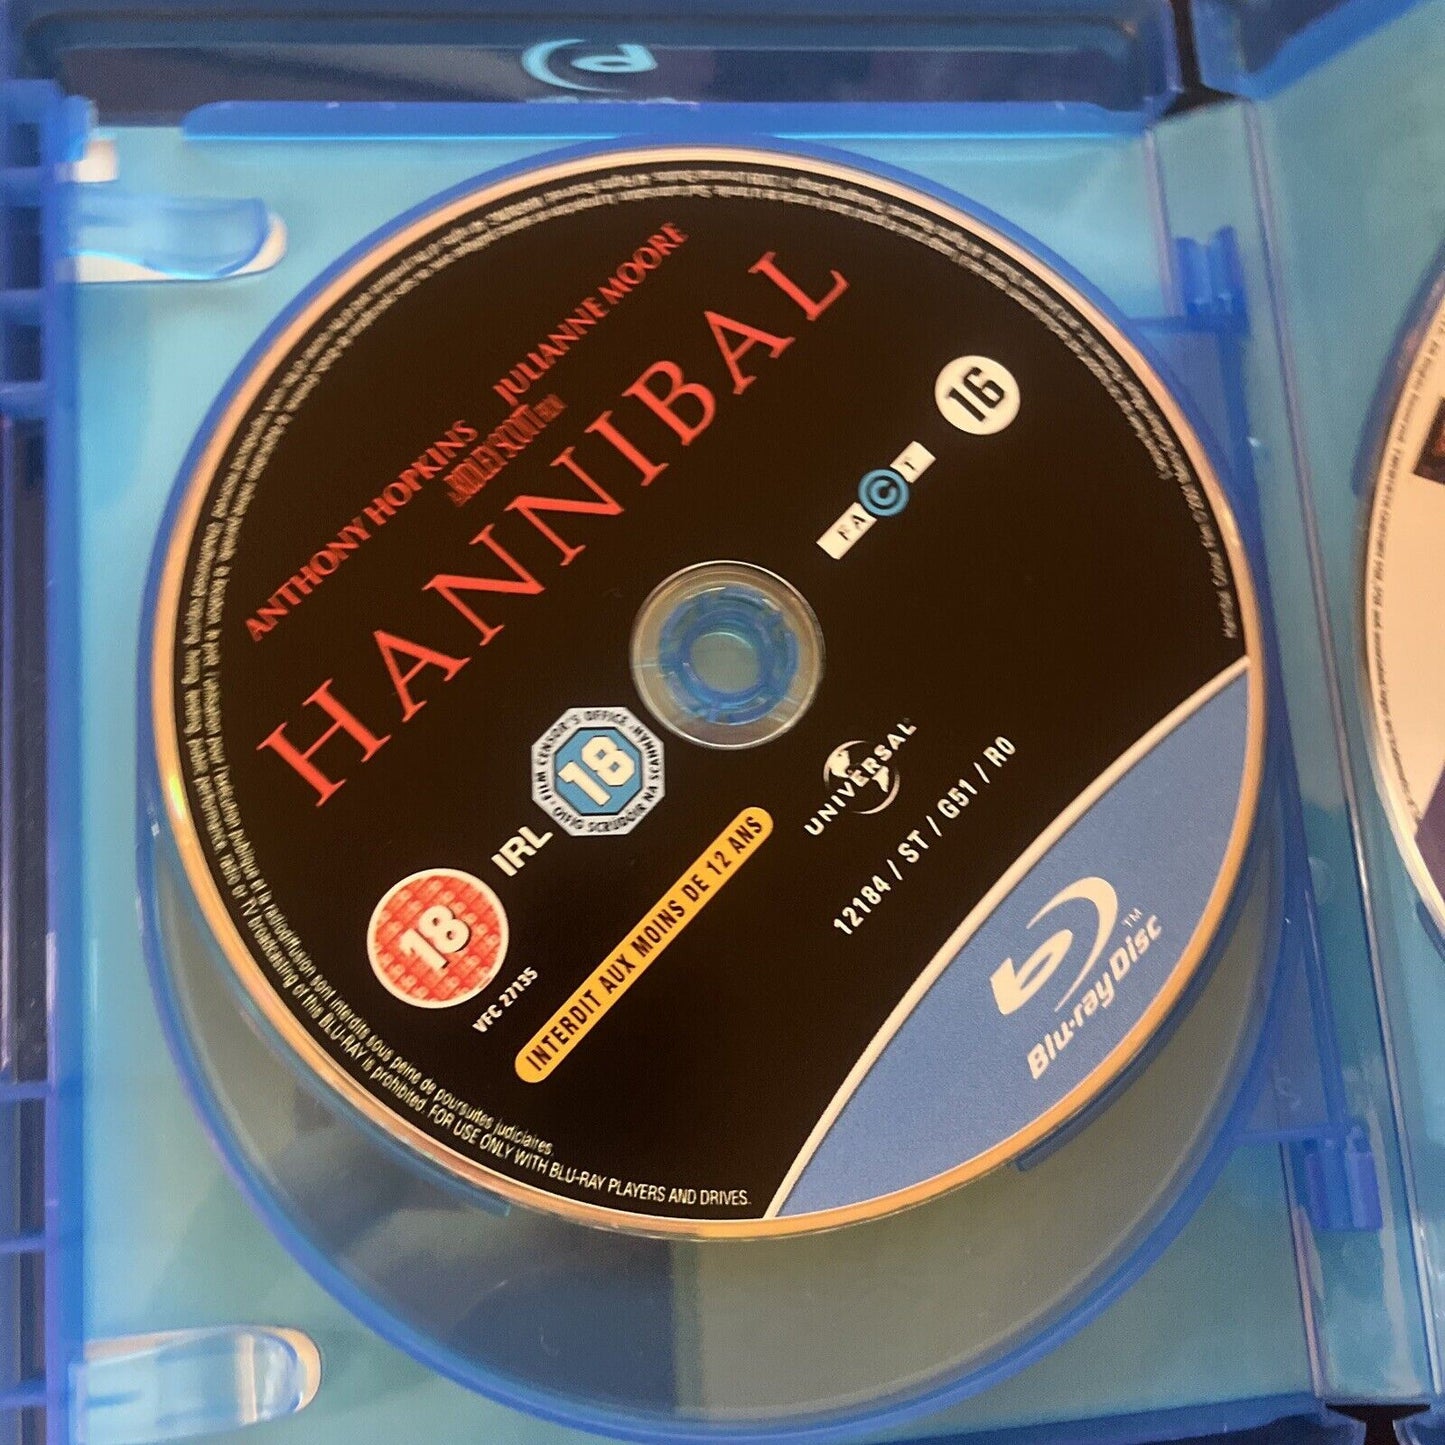 Hannibal Lecter Trilogy: Red Dragon, Silence of Lambs, Hannibal Bluray Region B